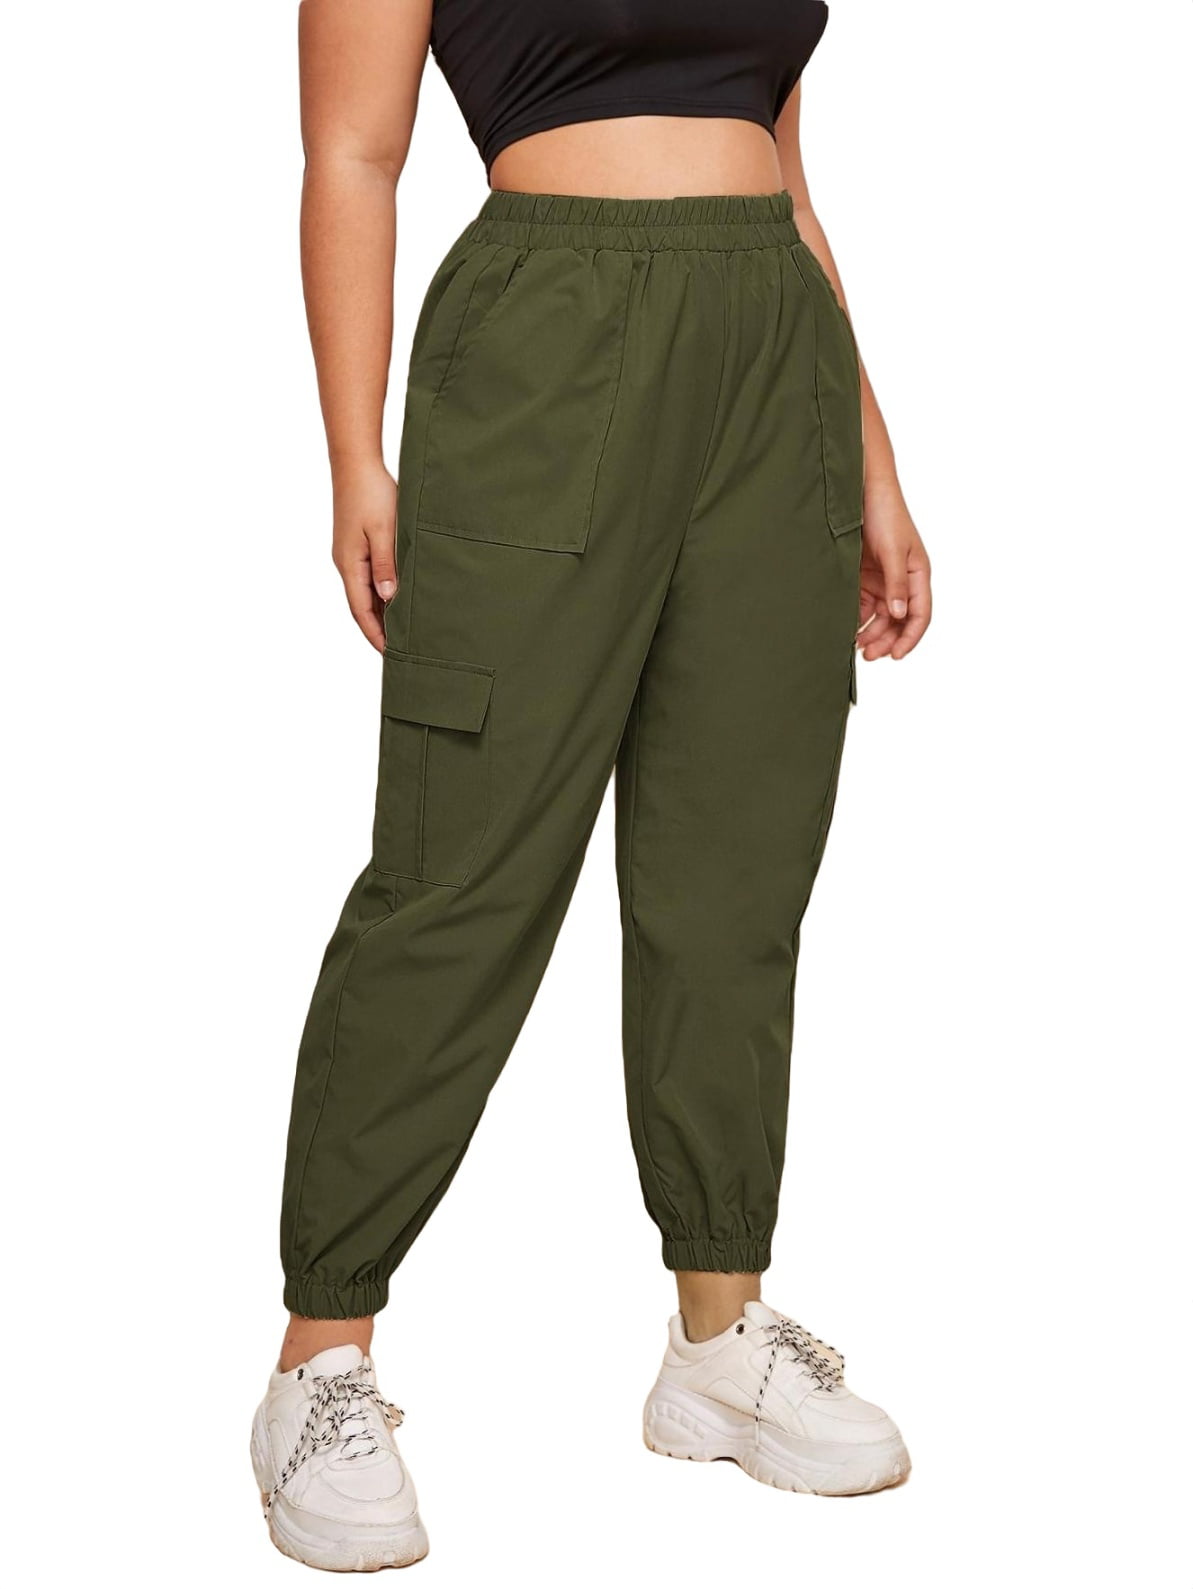 Jordbær Sodavand besked Womens Plus Pants Casual Plain High Waist Pocket Army Green 3XL -  Walmart.com